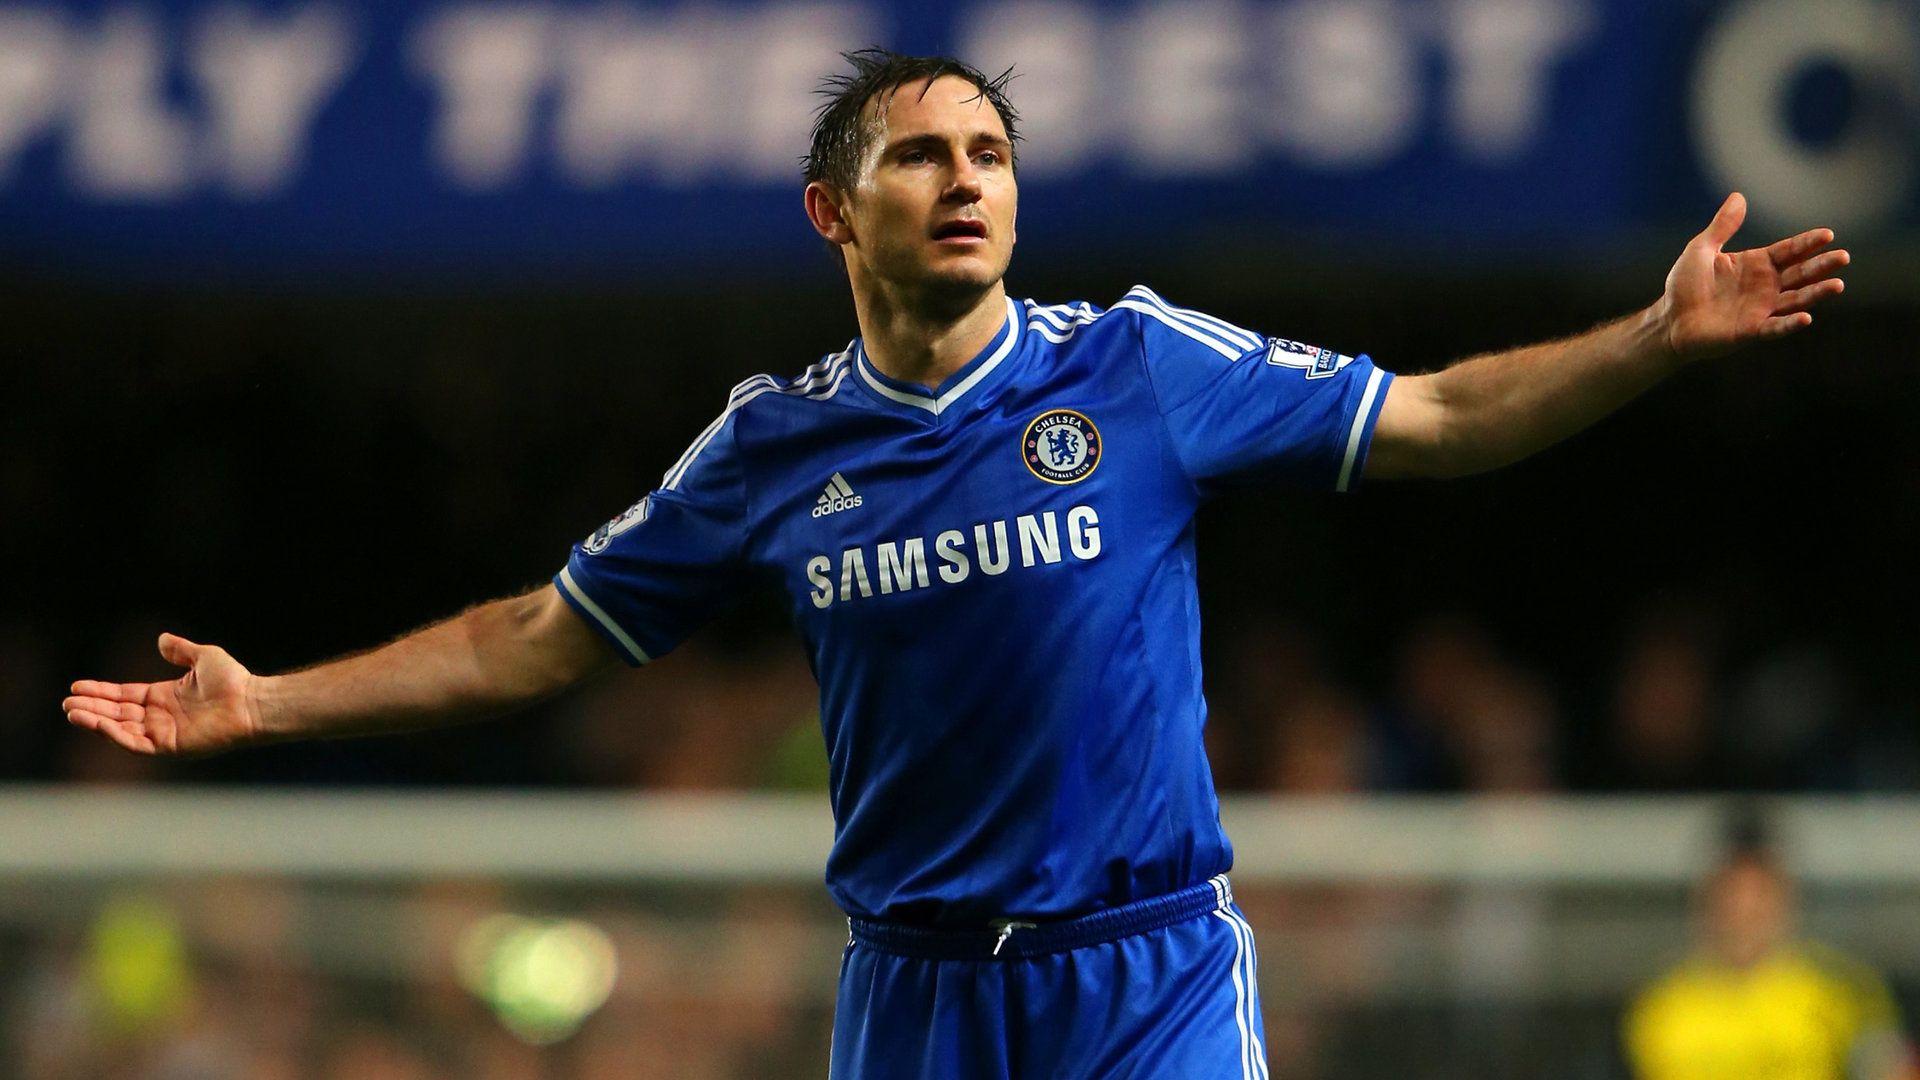 Chelsea Frank Lampard Wallpaper: Players, Teams, Leagues Wallpaper